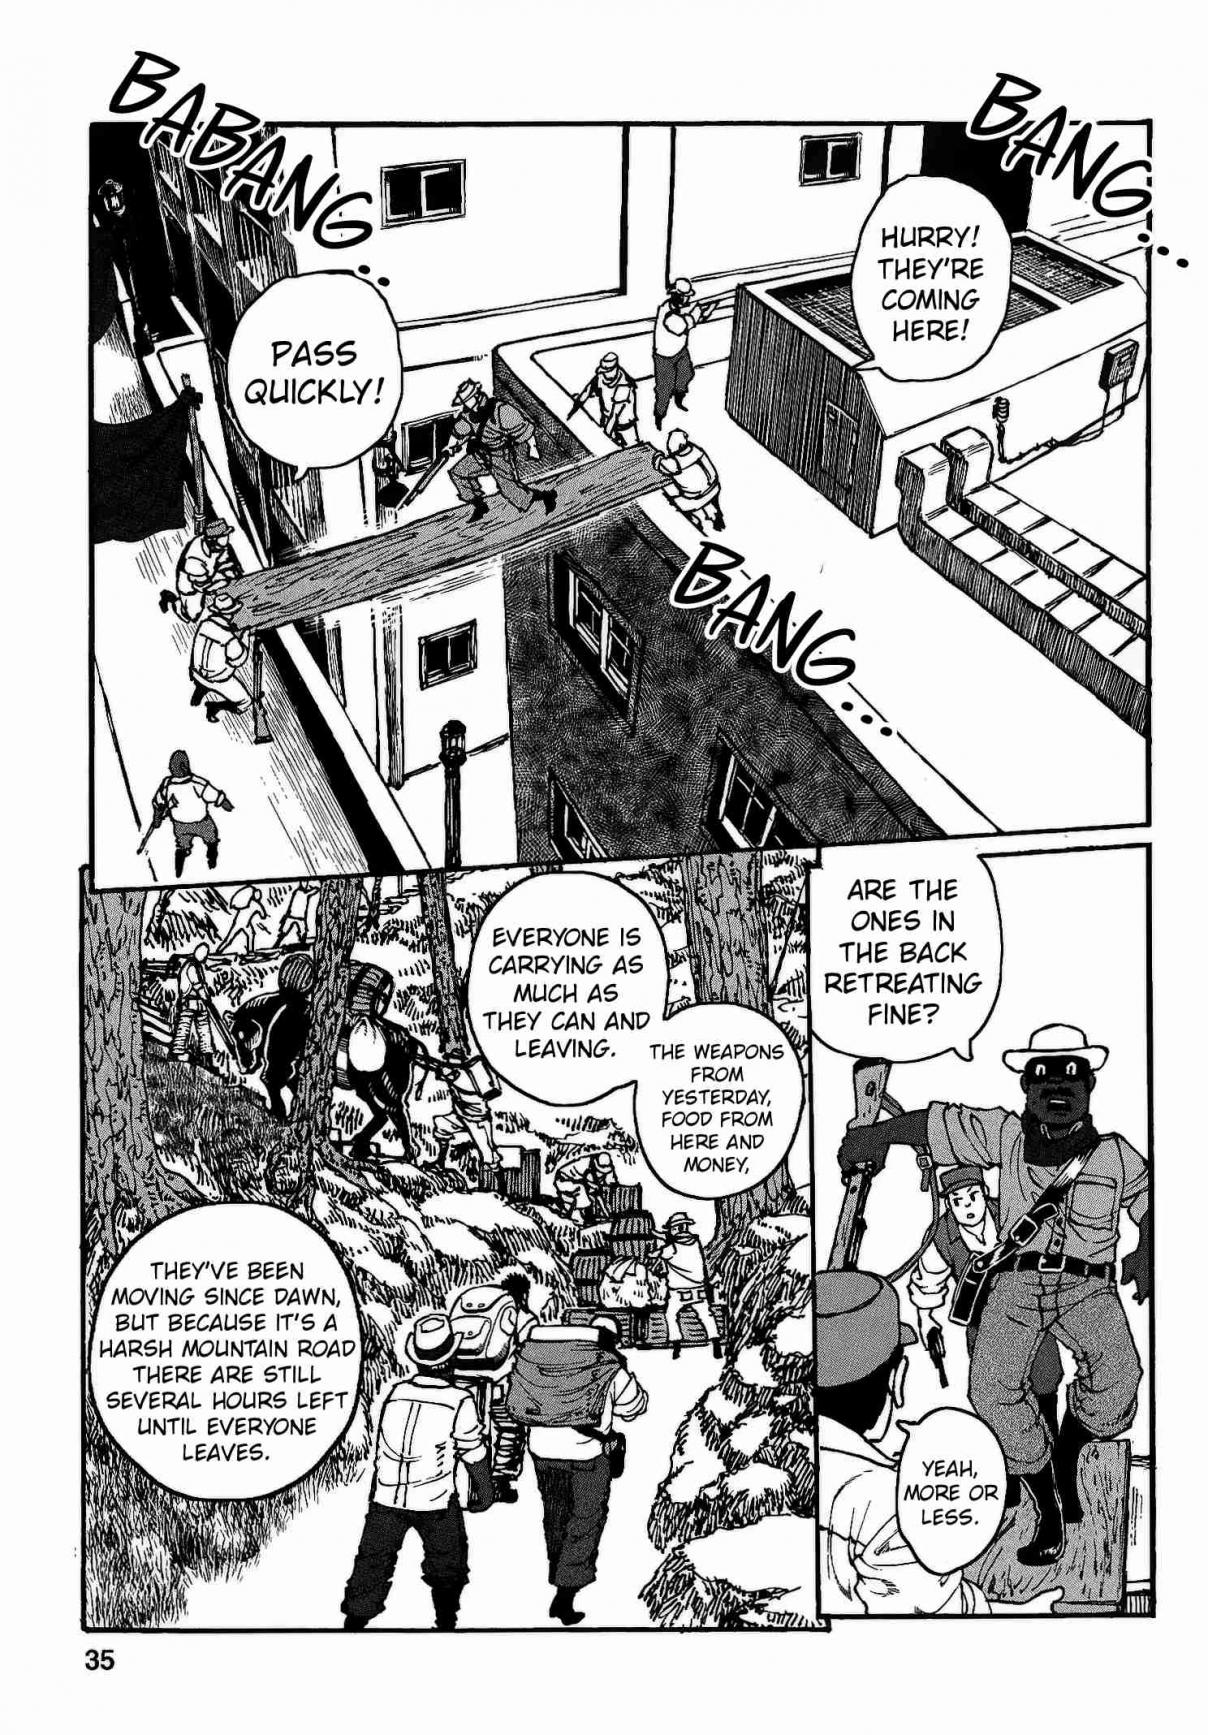 Groundless Sekigan no Sogekihei Vol. 5 Ch. 19 The Battle of Kagerizaka